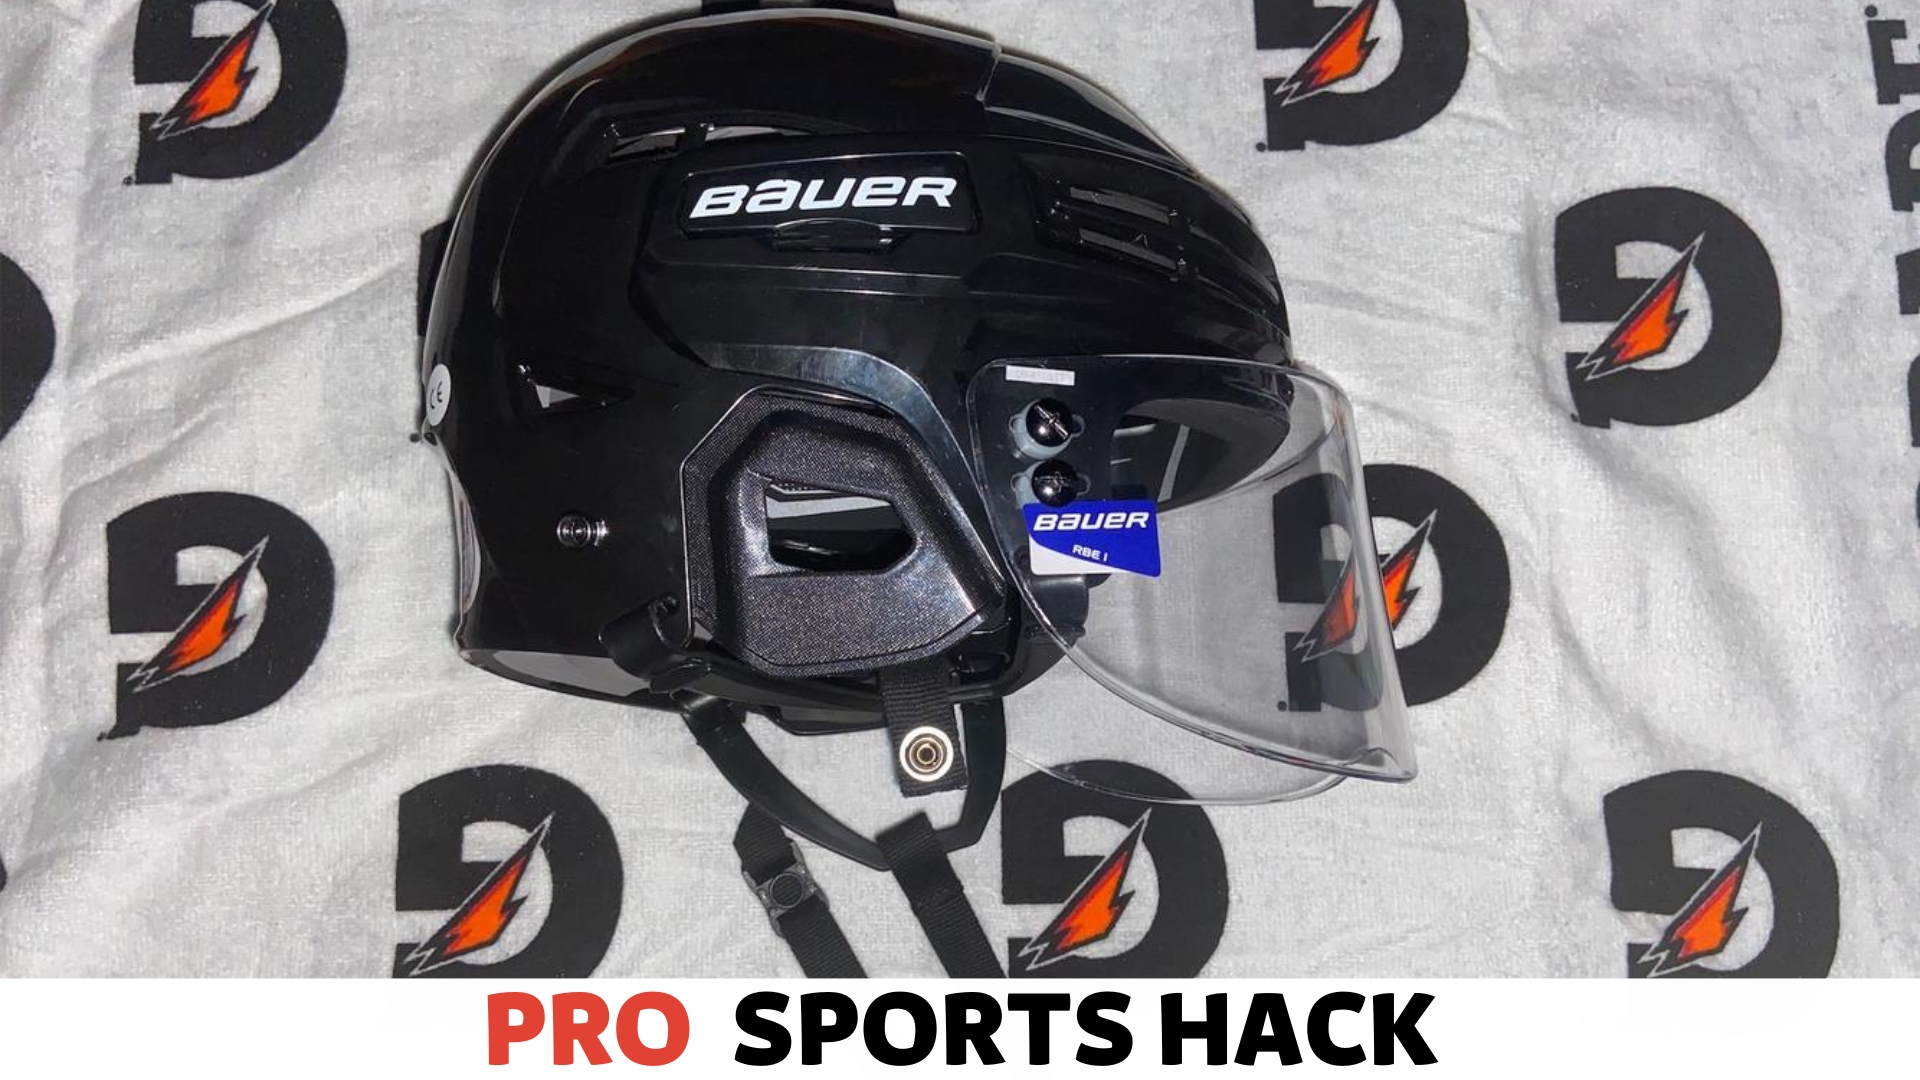 Why You Need an Ear Guards Hockey Helmet?